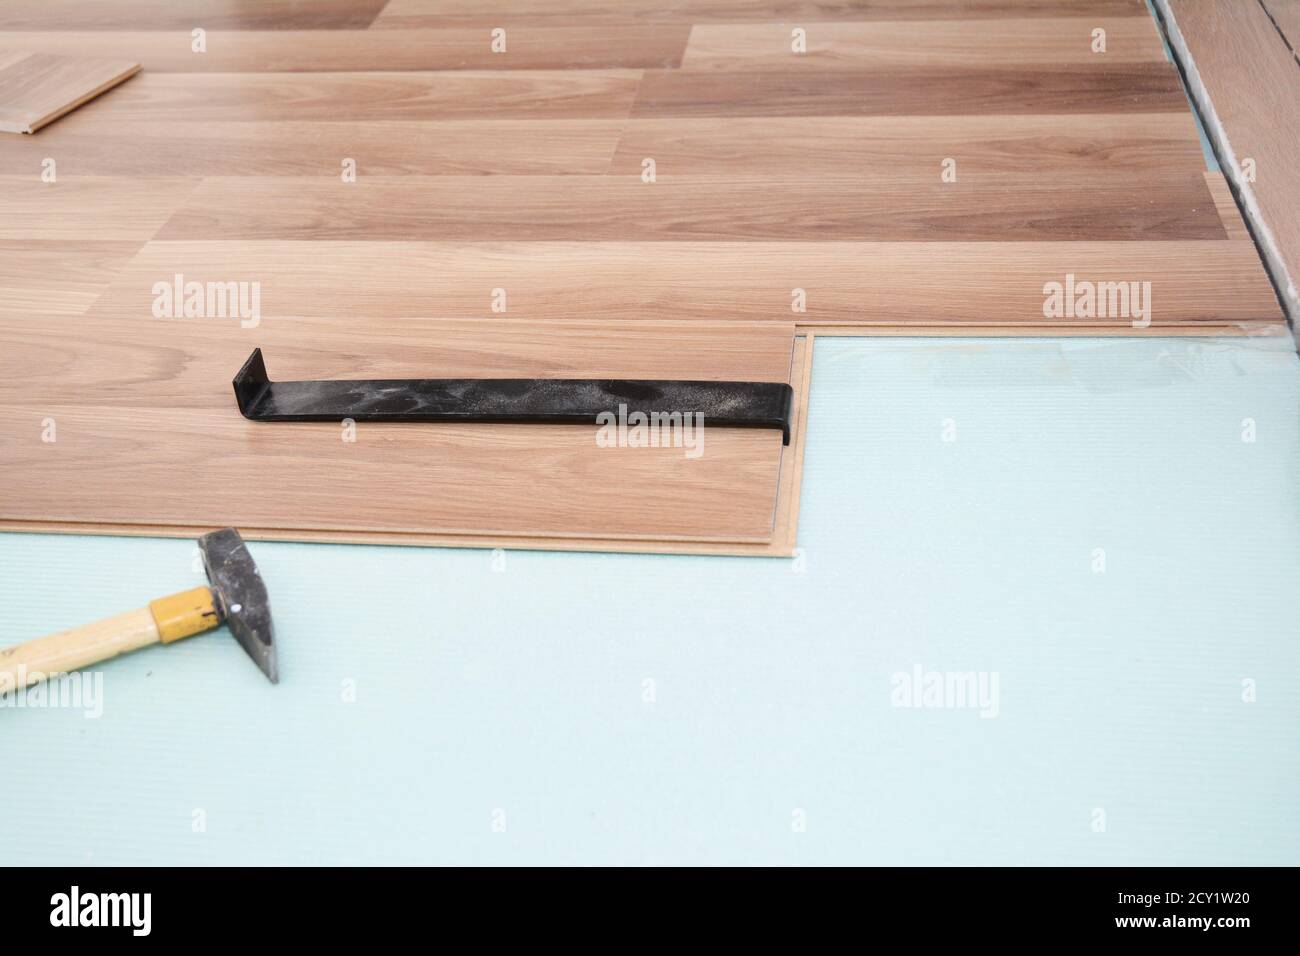 Laminate Wood Flooring with Work Tools. Stock Photo